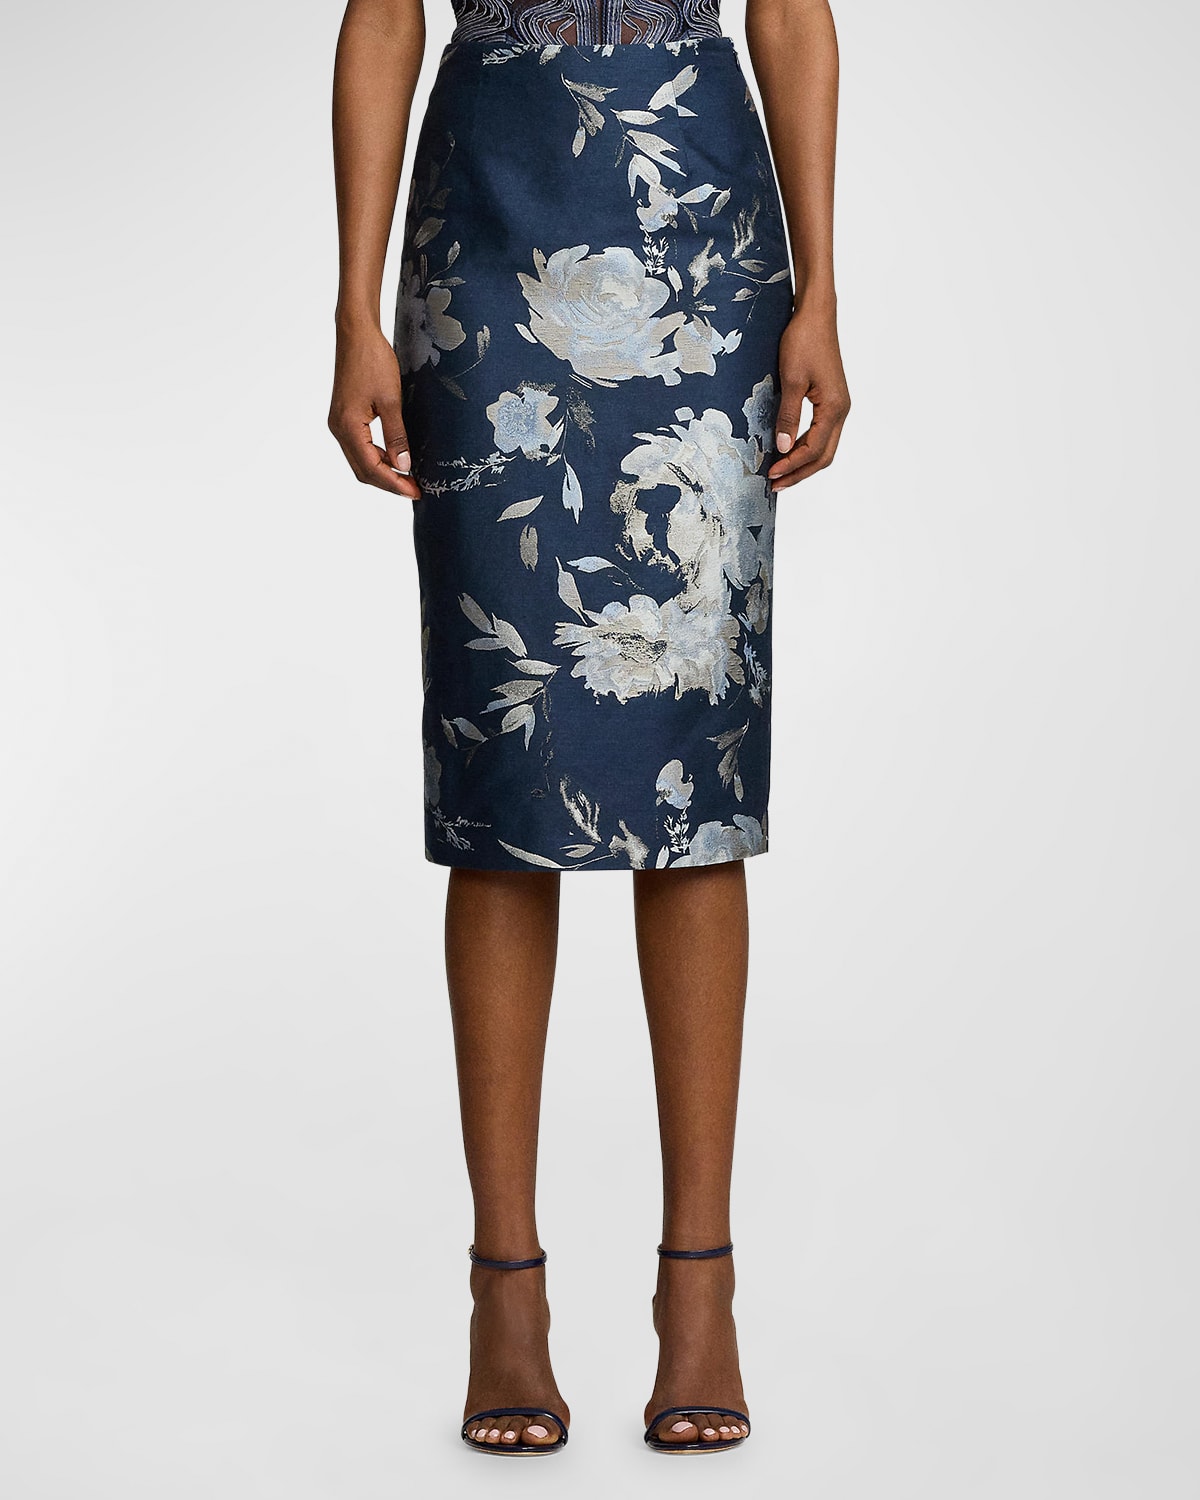 Ralph Lauren Whitley Floral Jacquard Pencil Skirt In Blue Multi